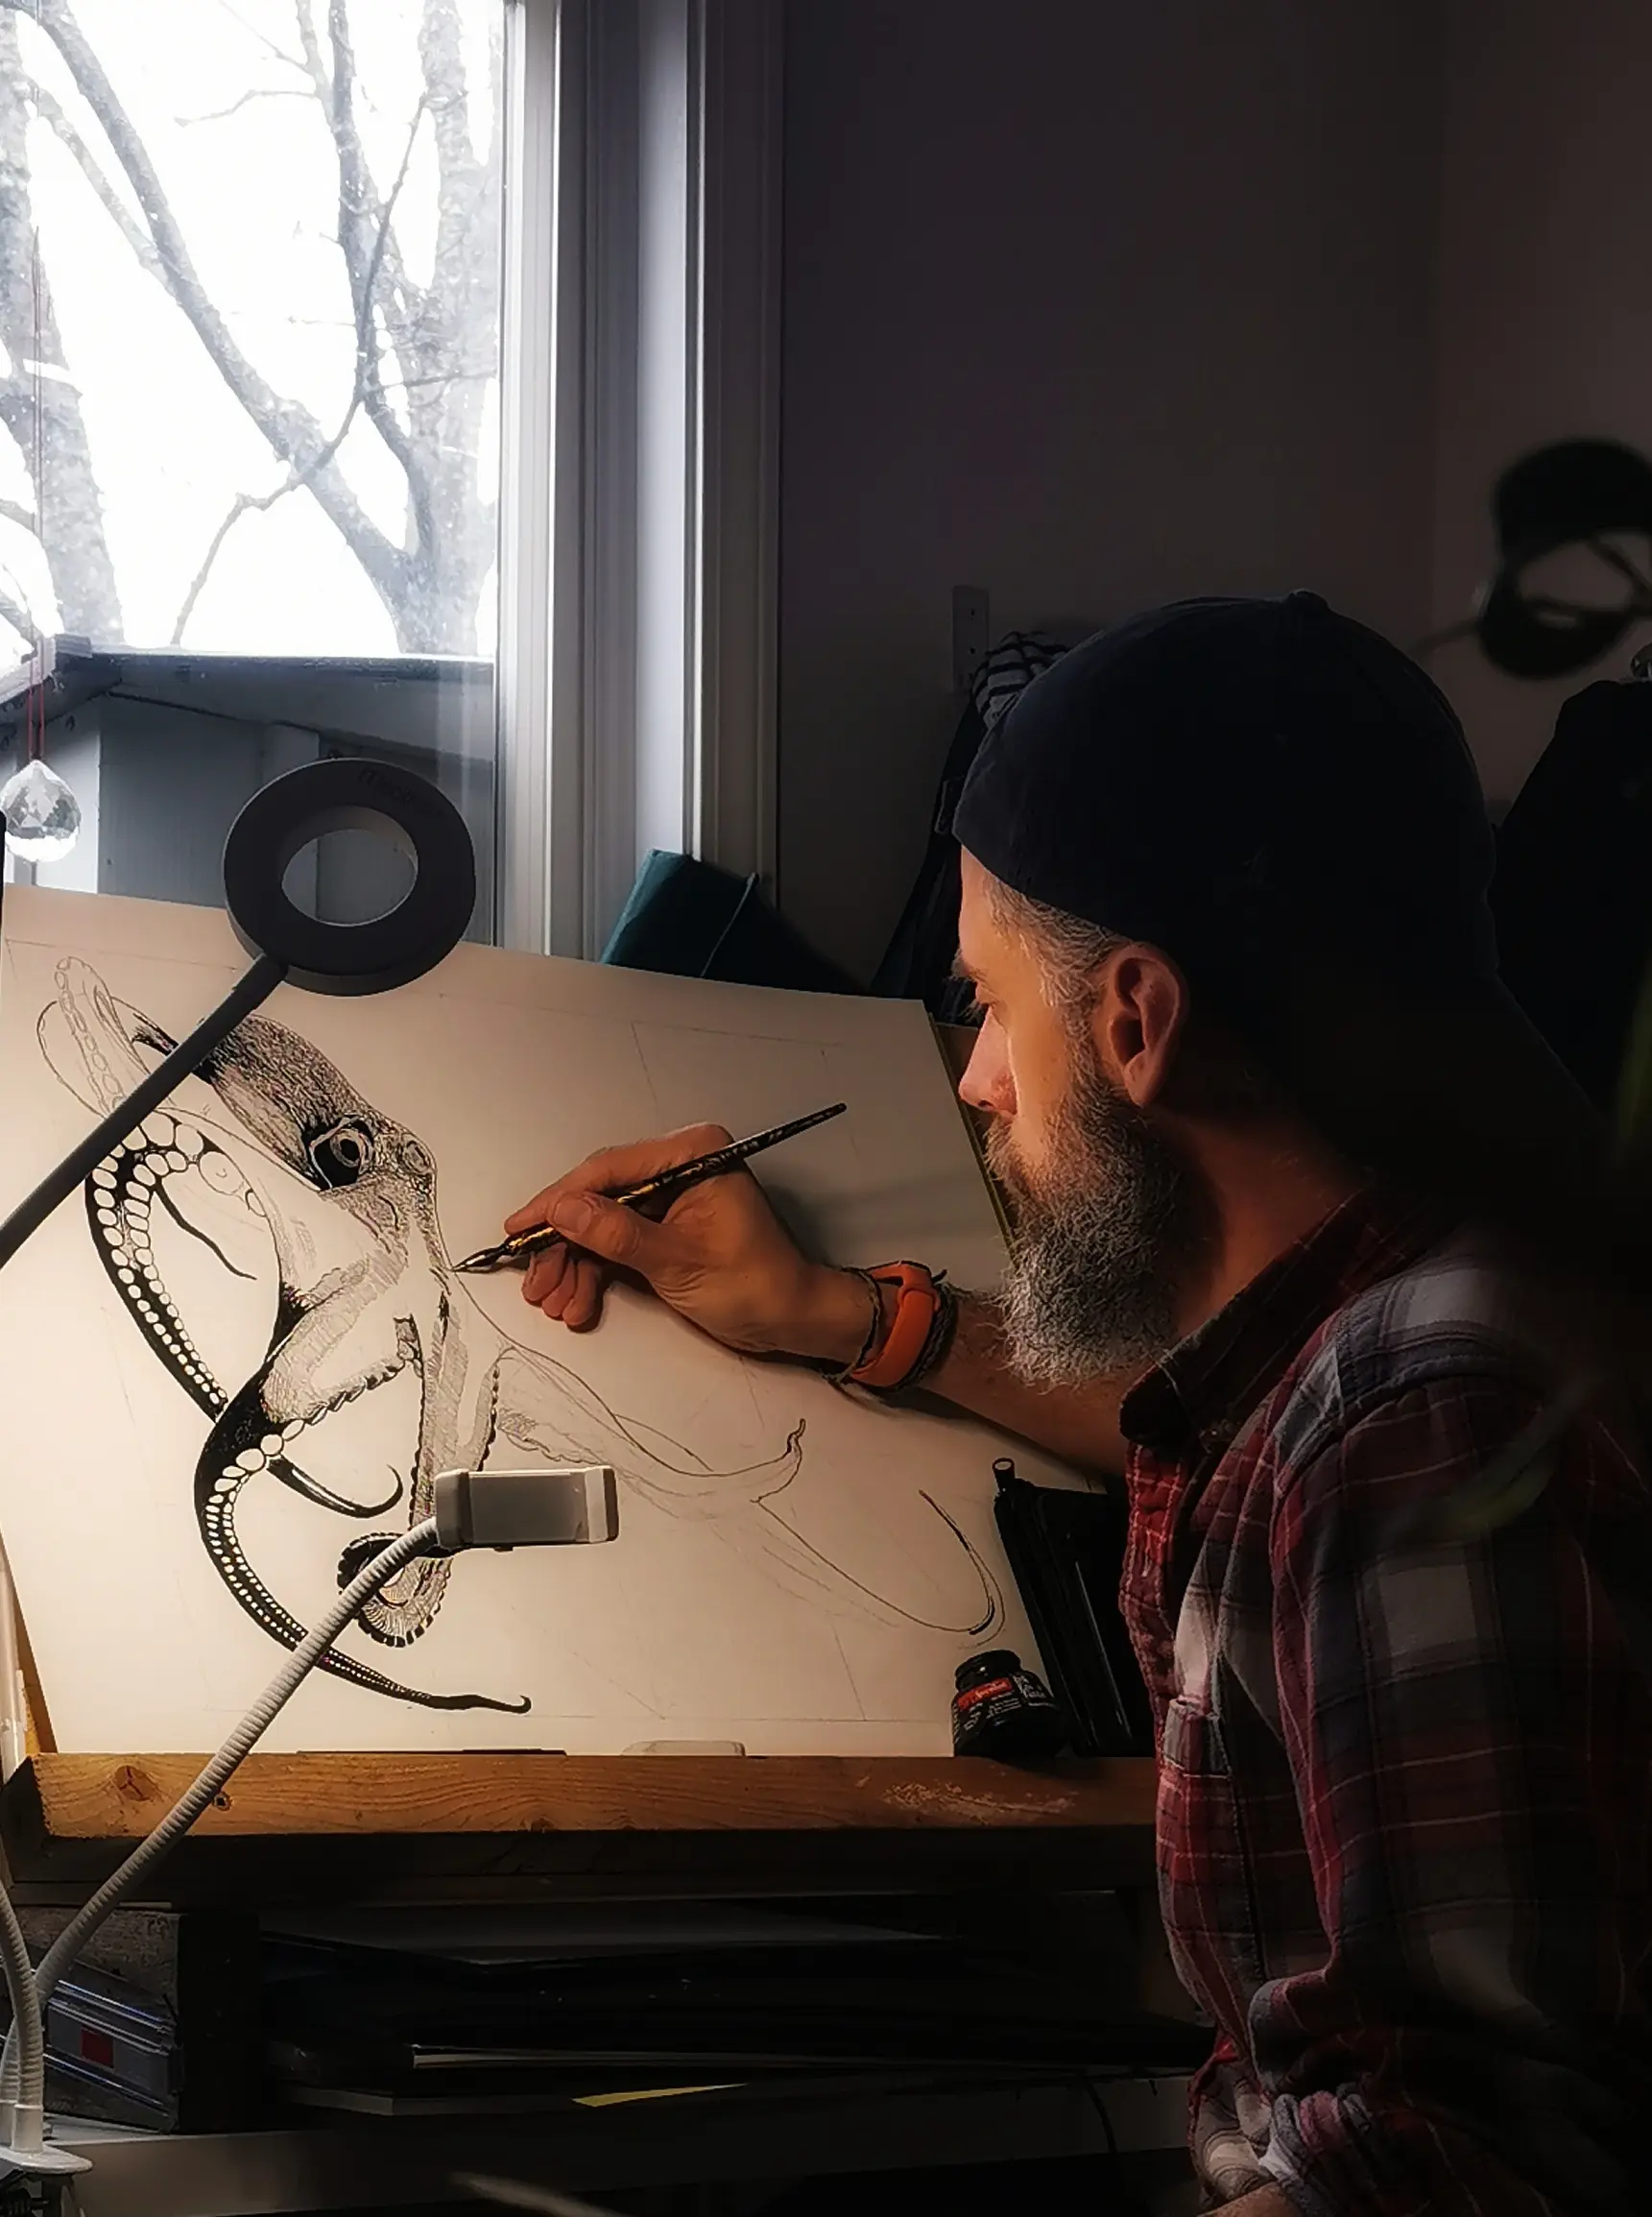 Meet Adam Bartosik, illustrator